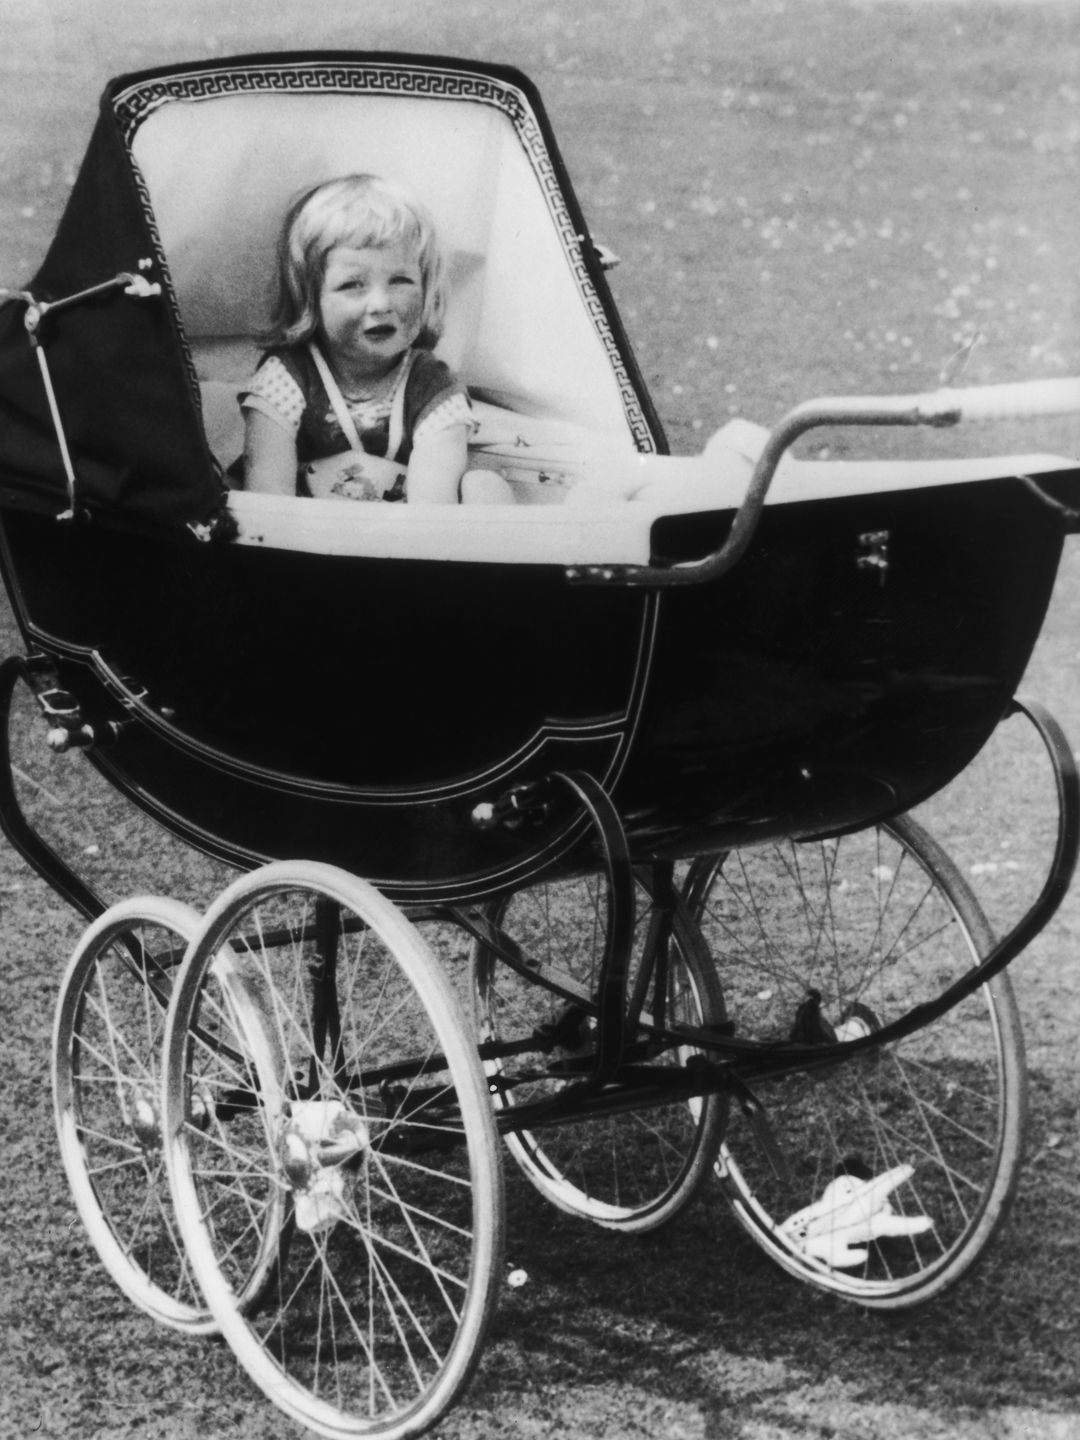 A young Princess Diana in a pram